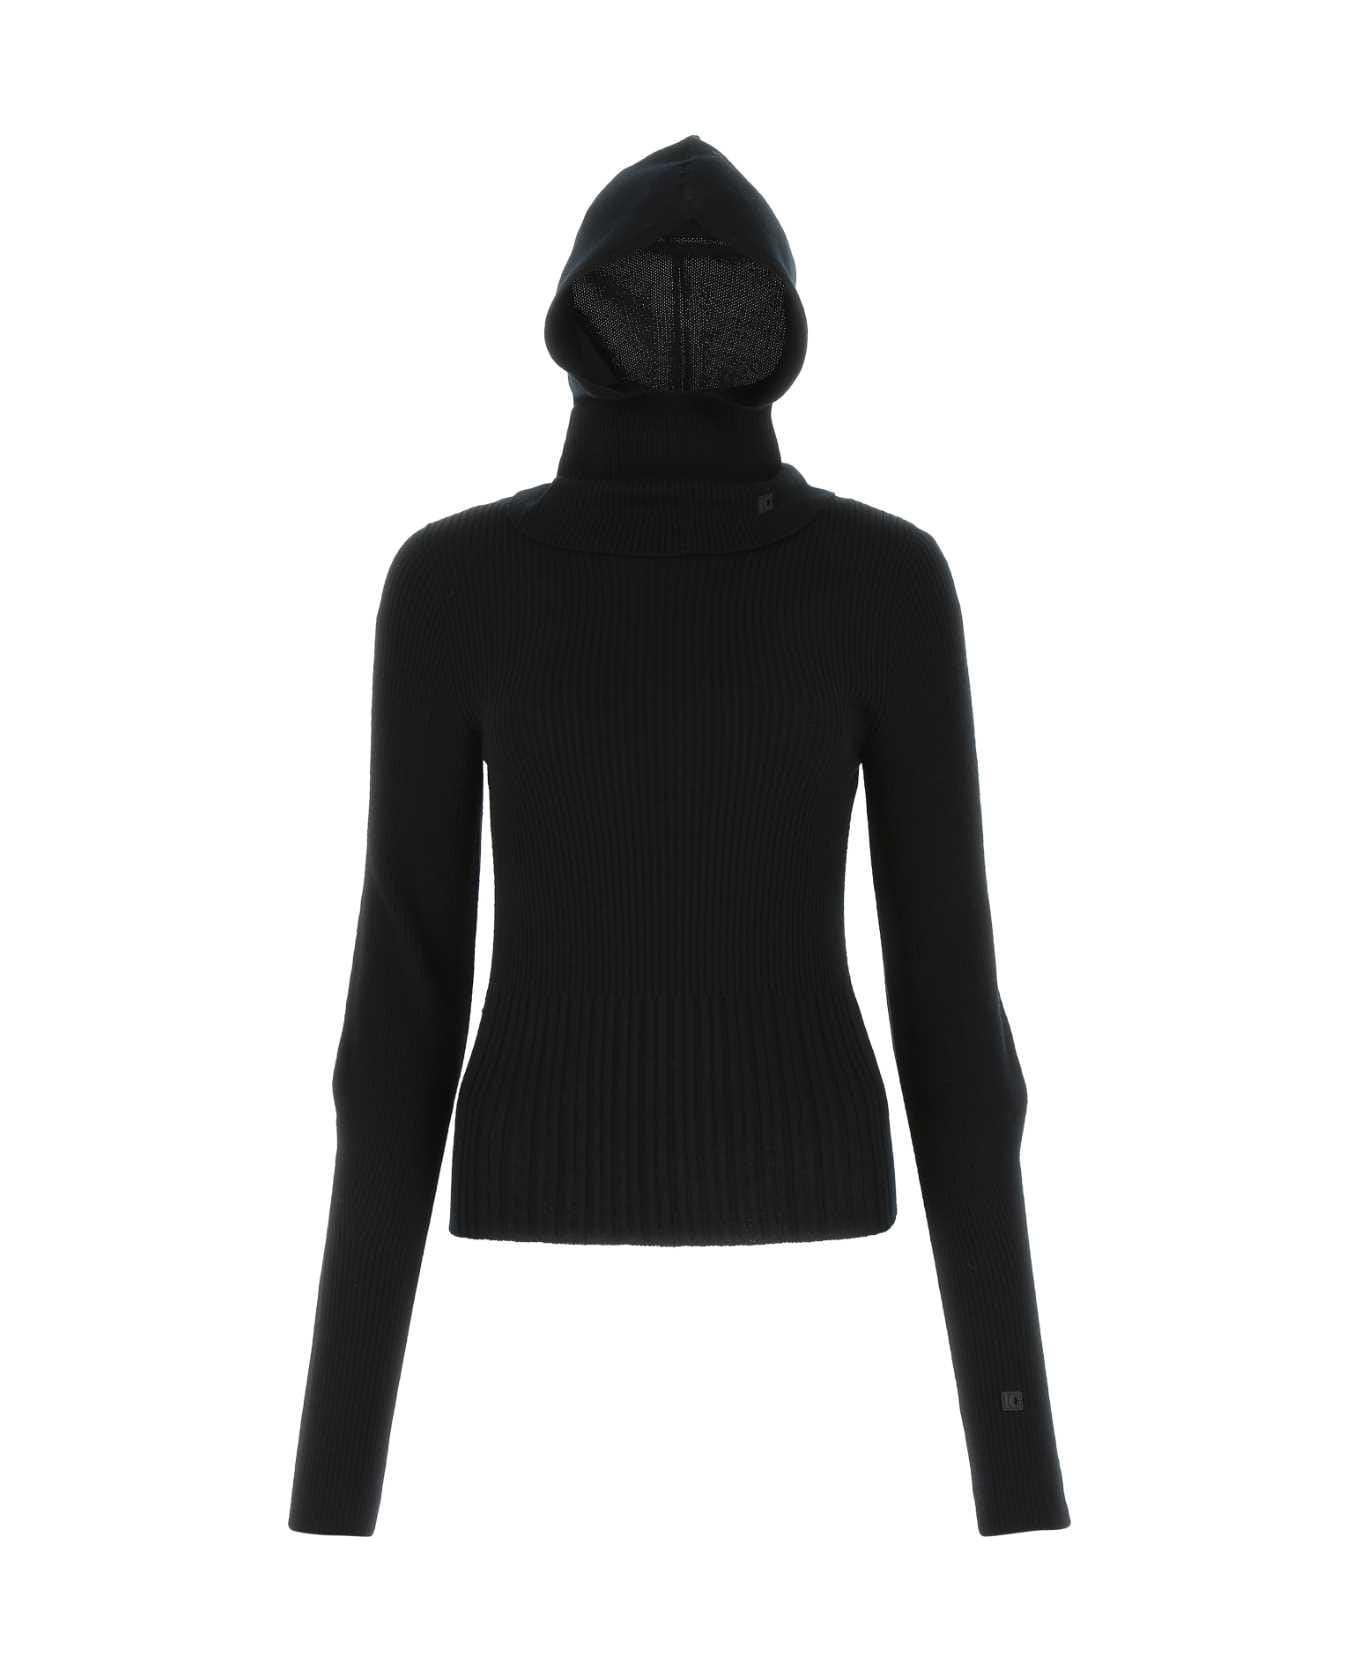 Low Classic Black Wool Sweater - 0372